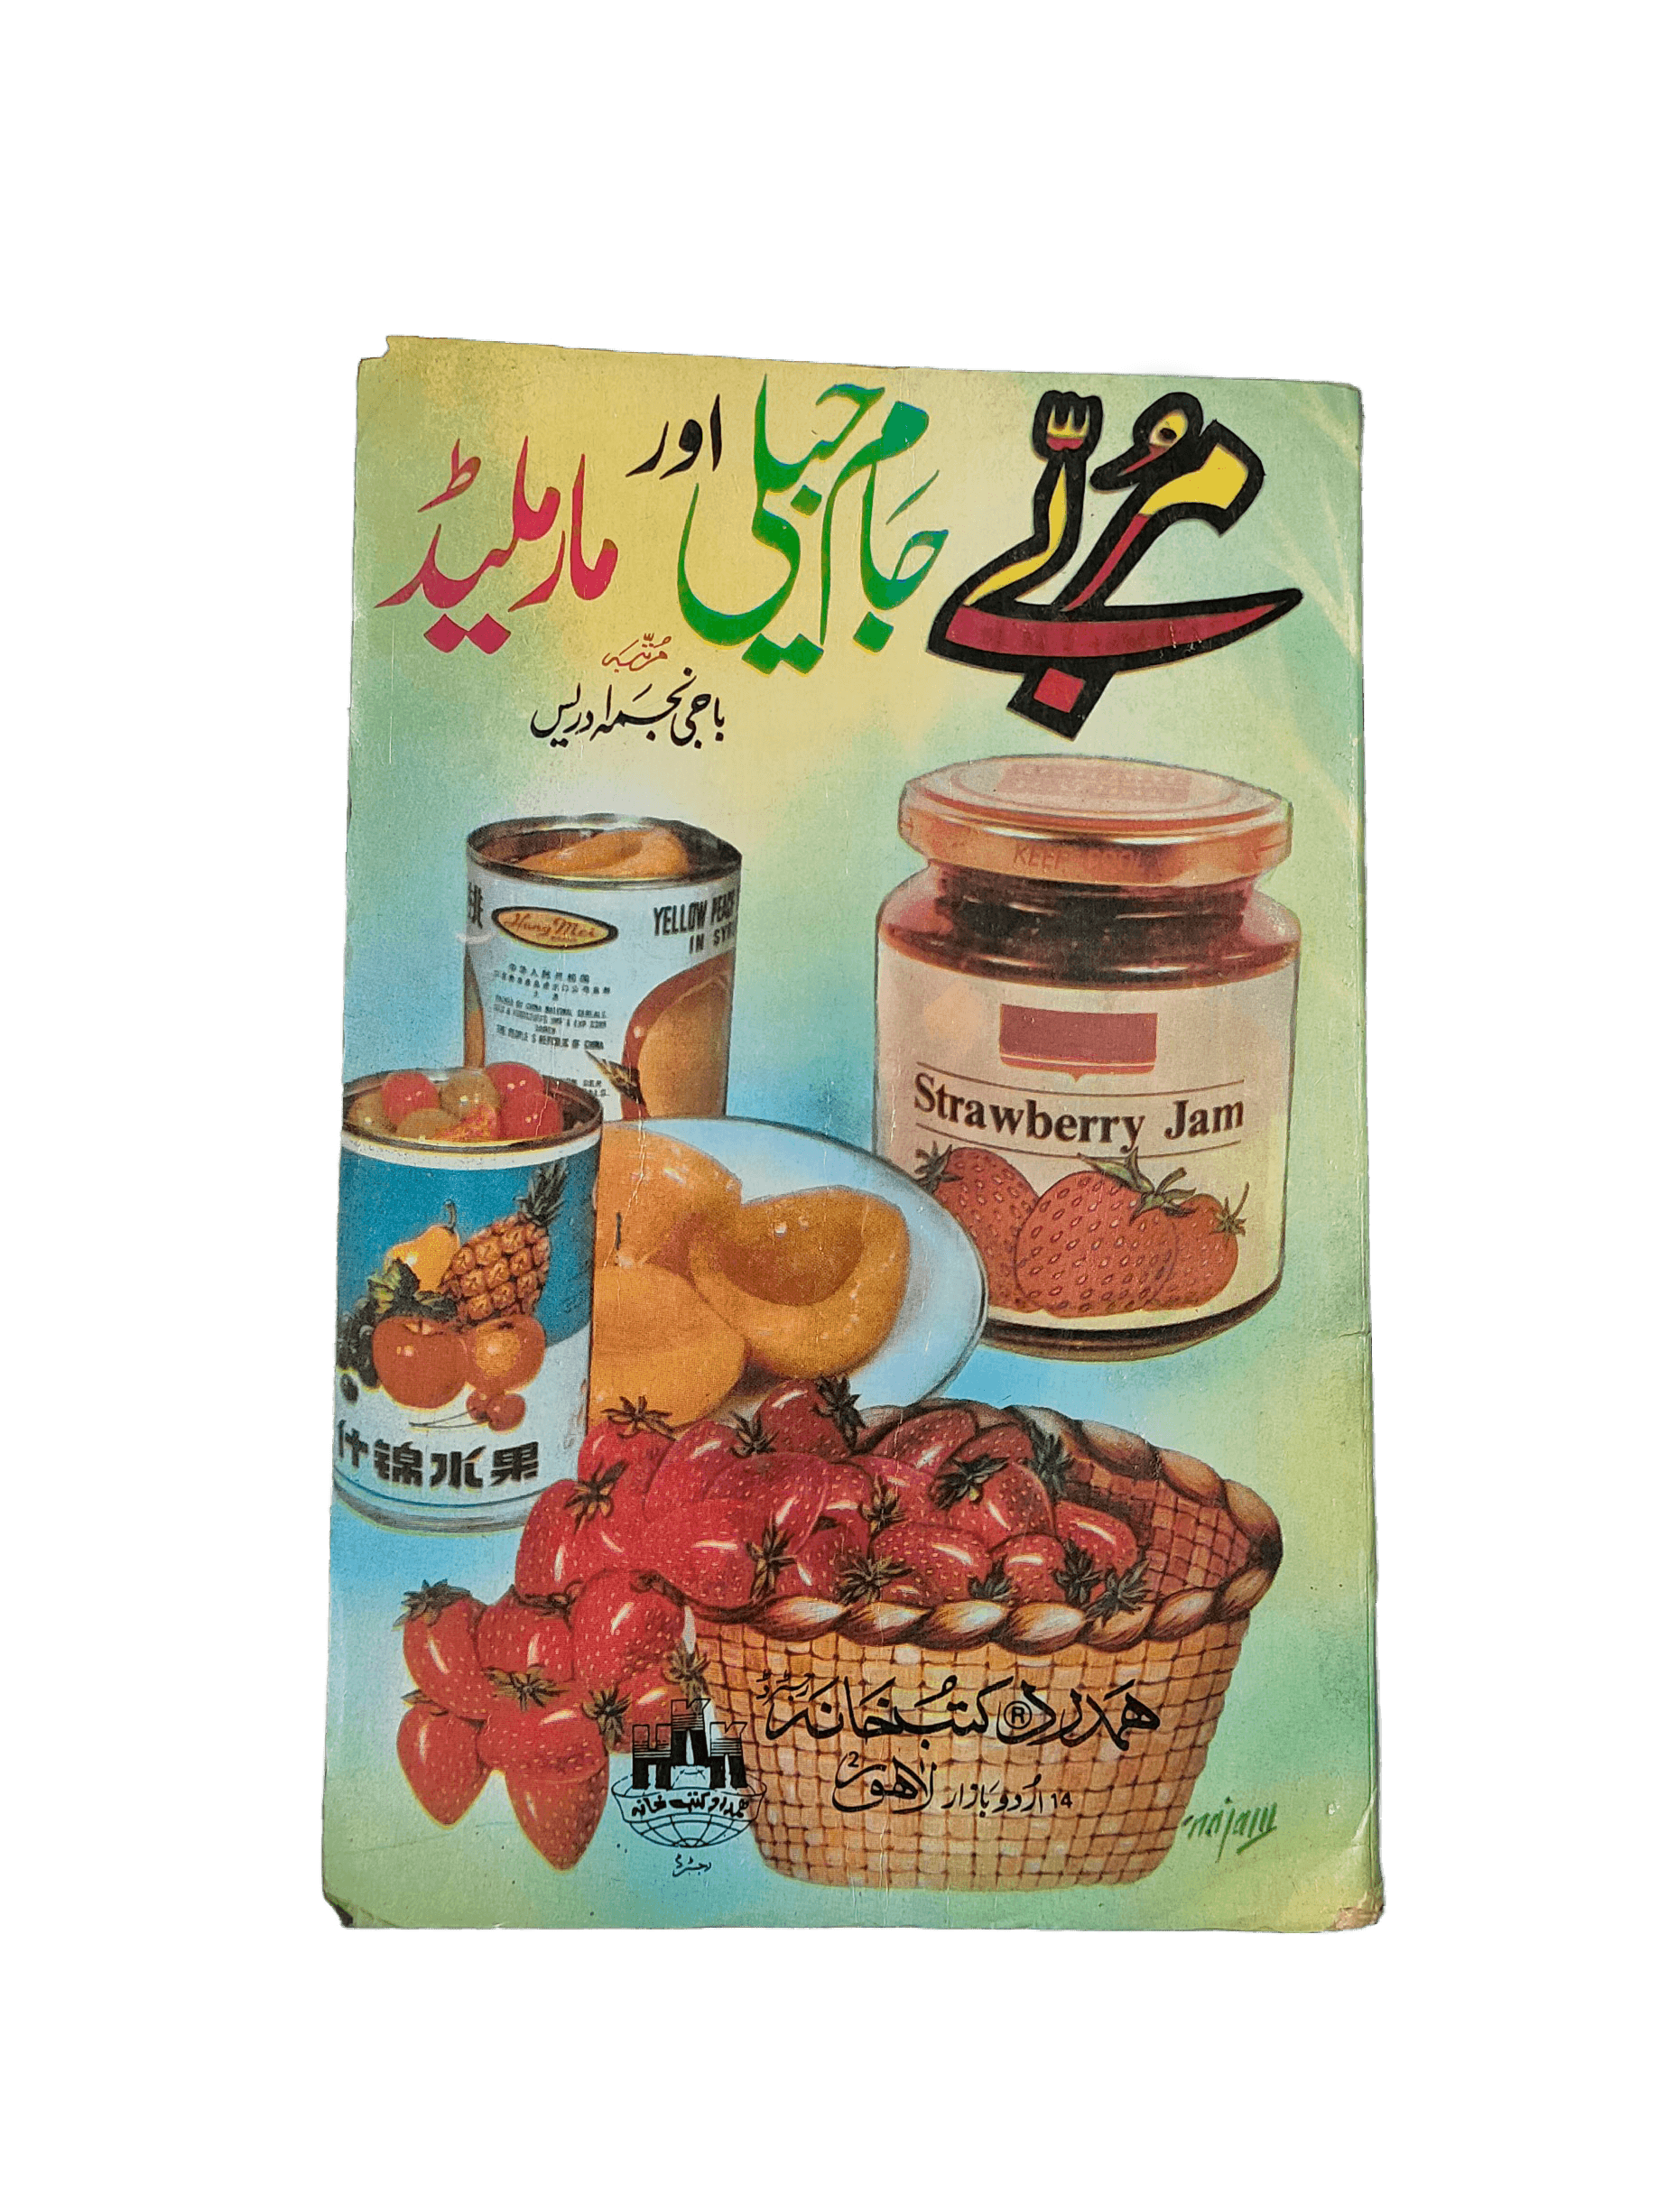 Murabbay, Jam Jelly Aur Marmalade(Preserves, Jam Jelly, and Marmalade) - KHAJISTAN™